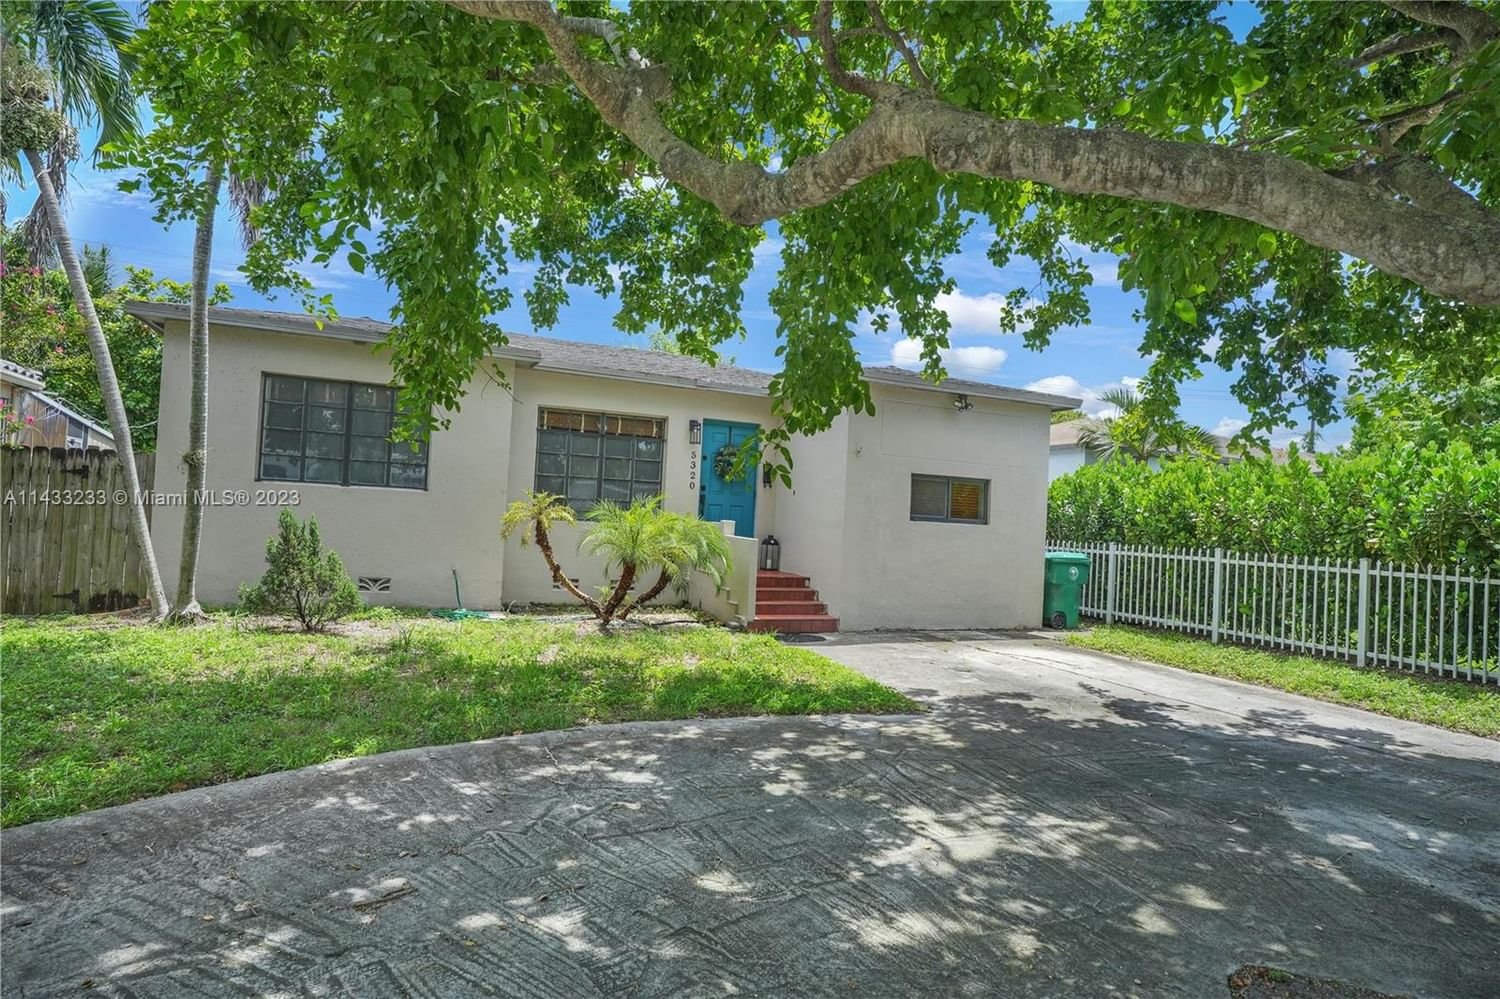 Real estate property located at 5320 4th St, Miami-Dade County, Miami, FL